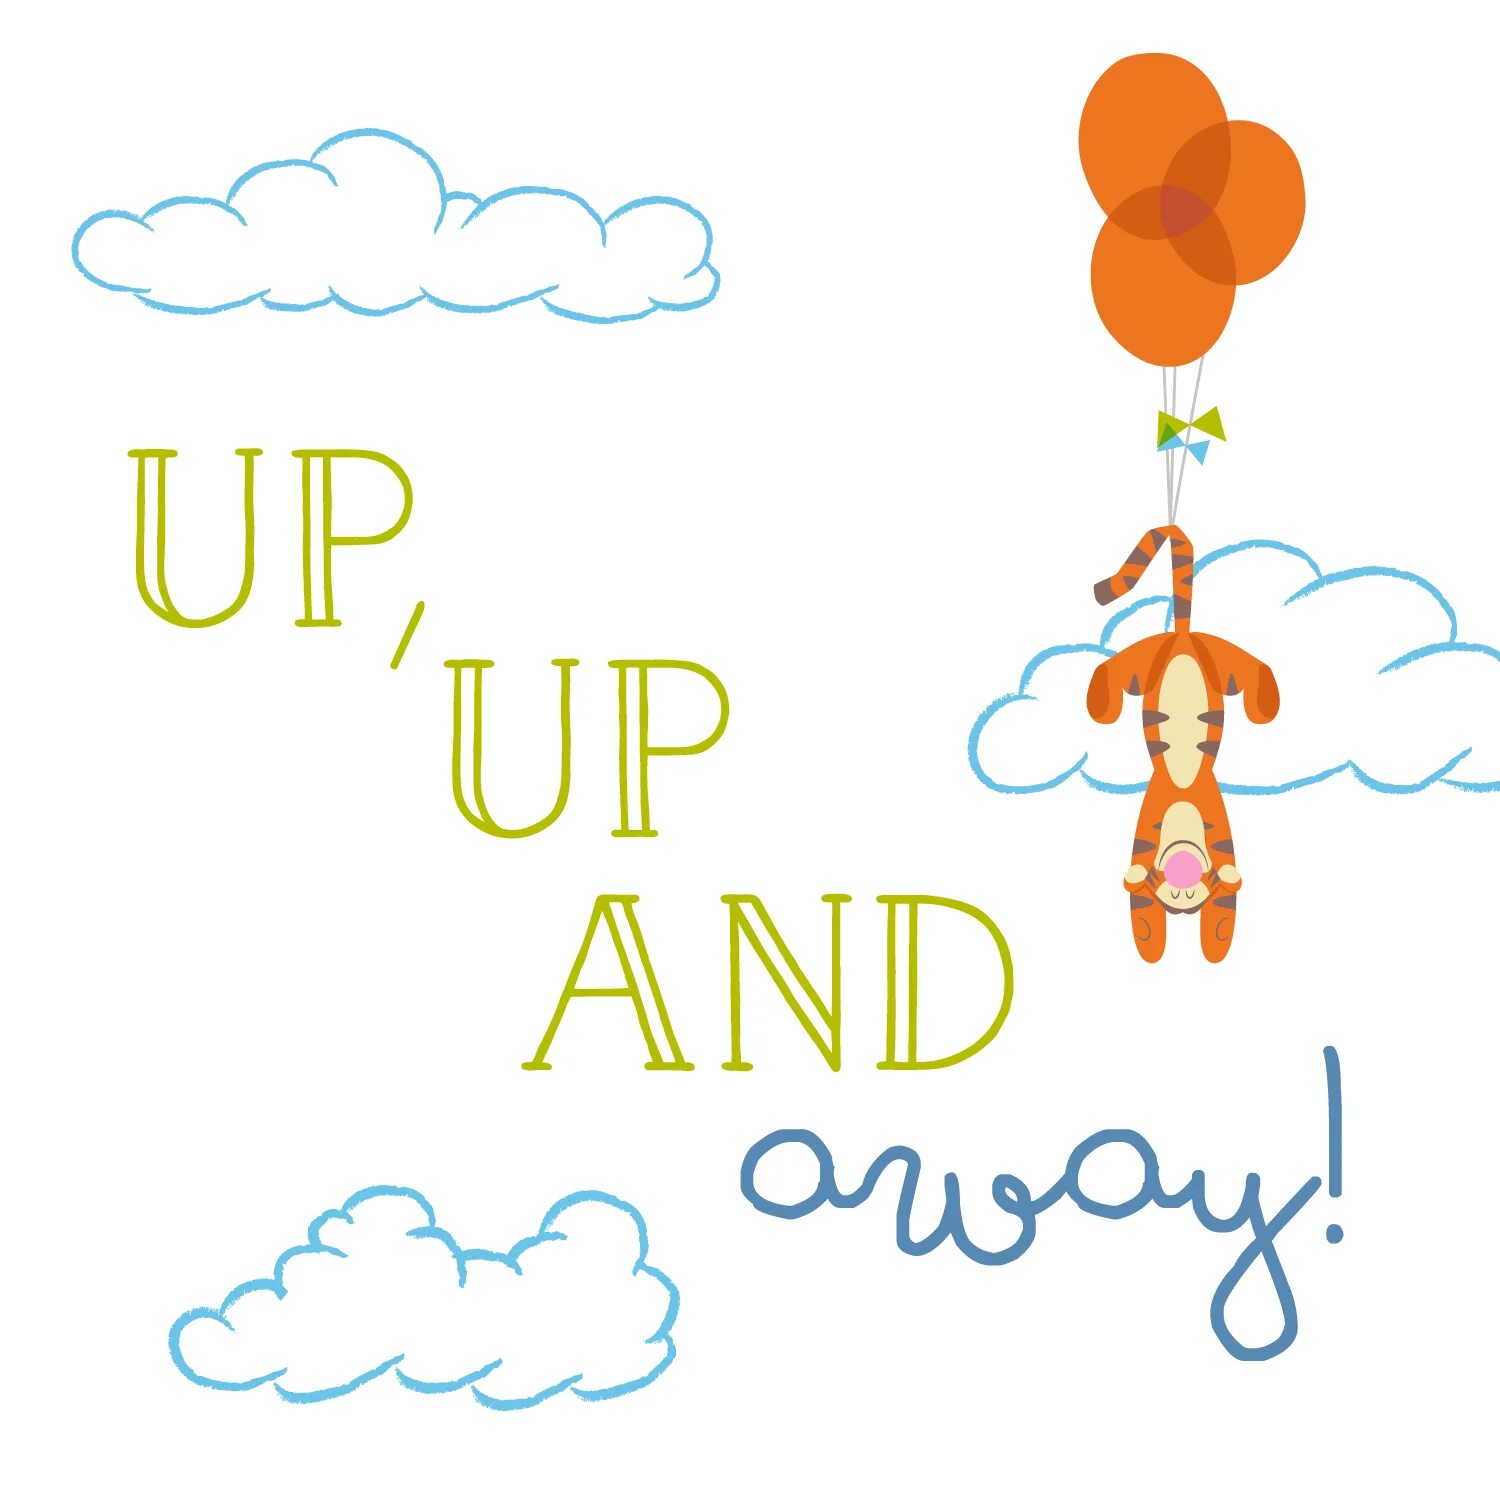 Up and away. Up up. Up up and away. "Up up and away" stocking Kooler Design. Up and away 1